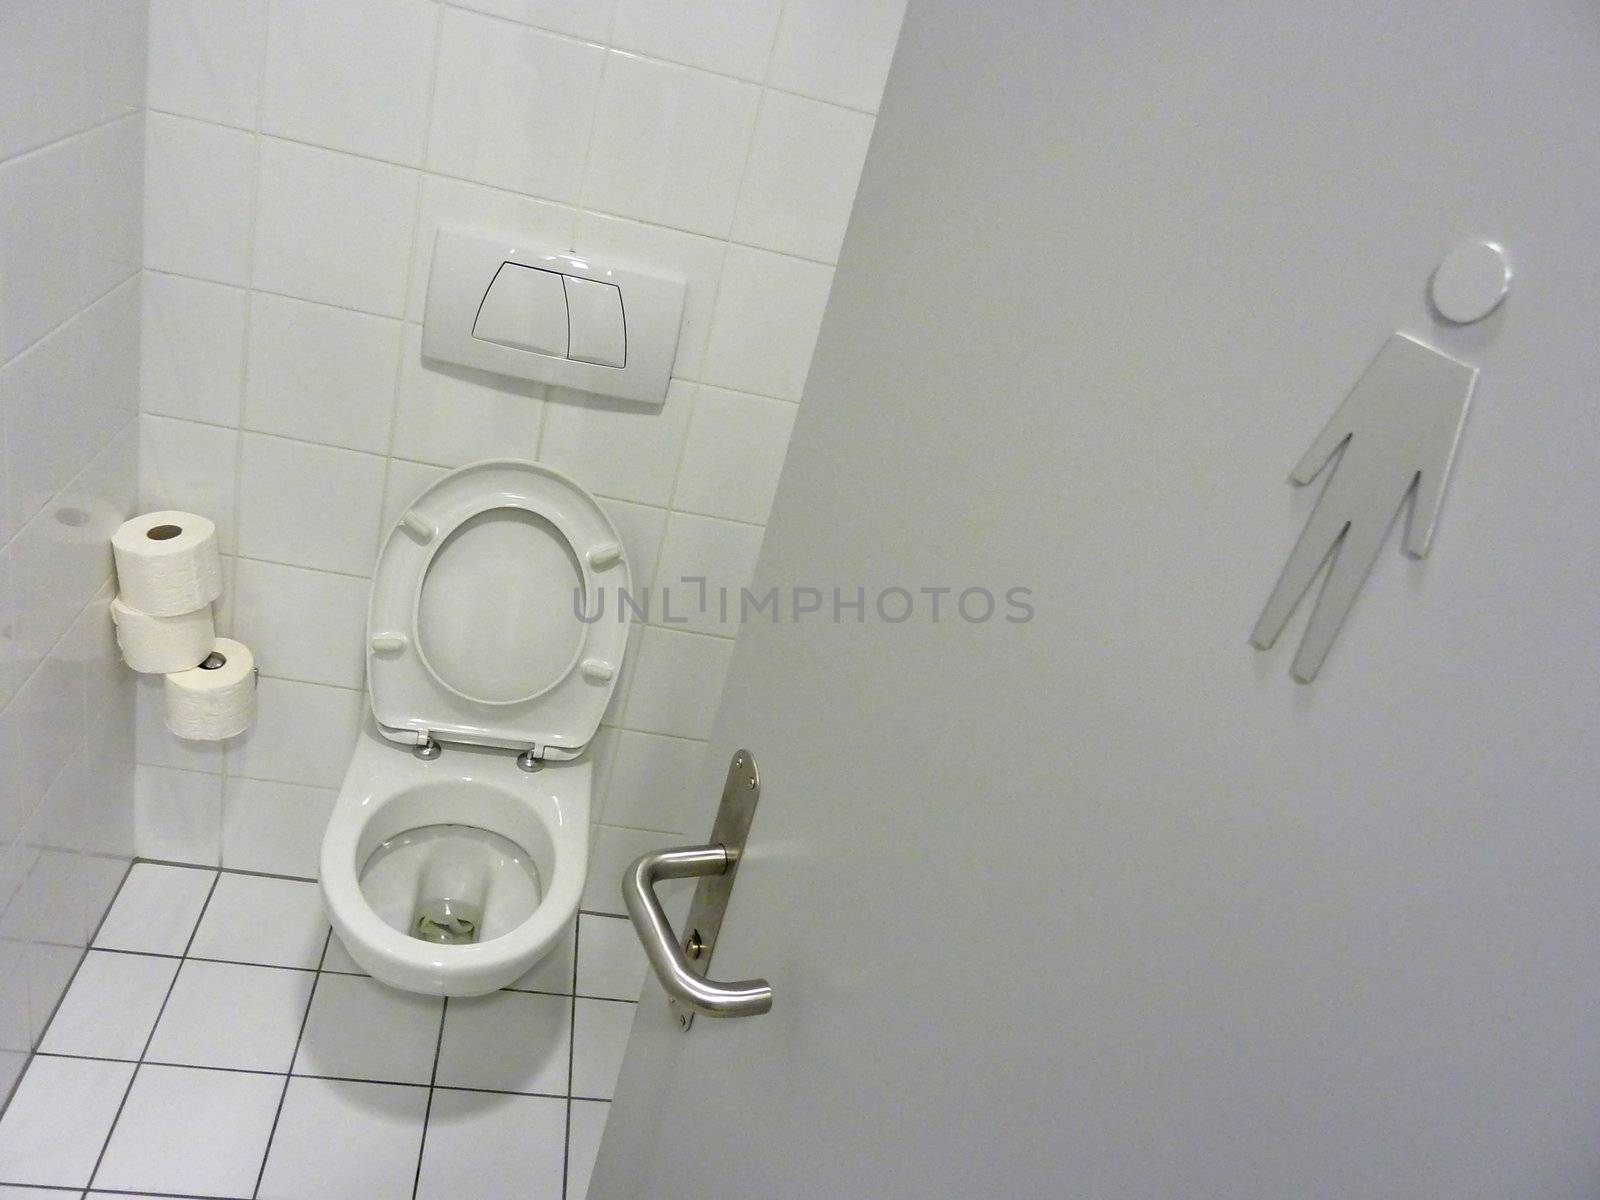 Toilet for men by Elenaphotos21